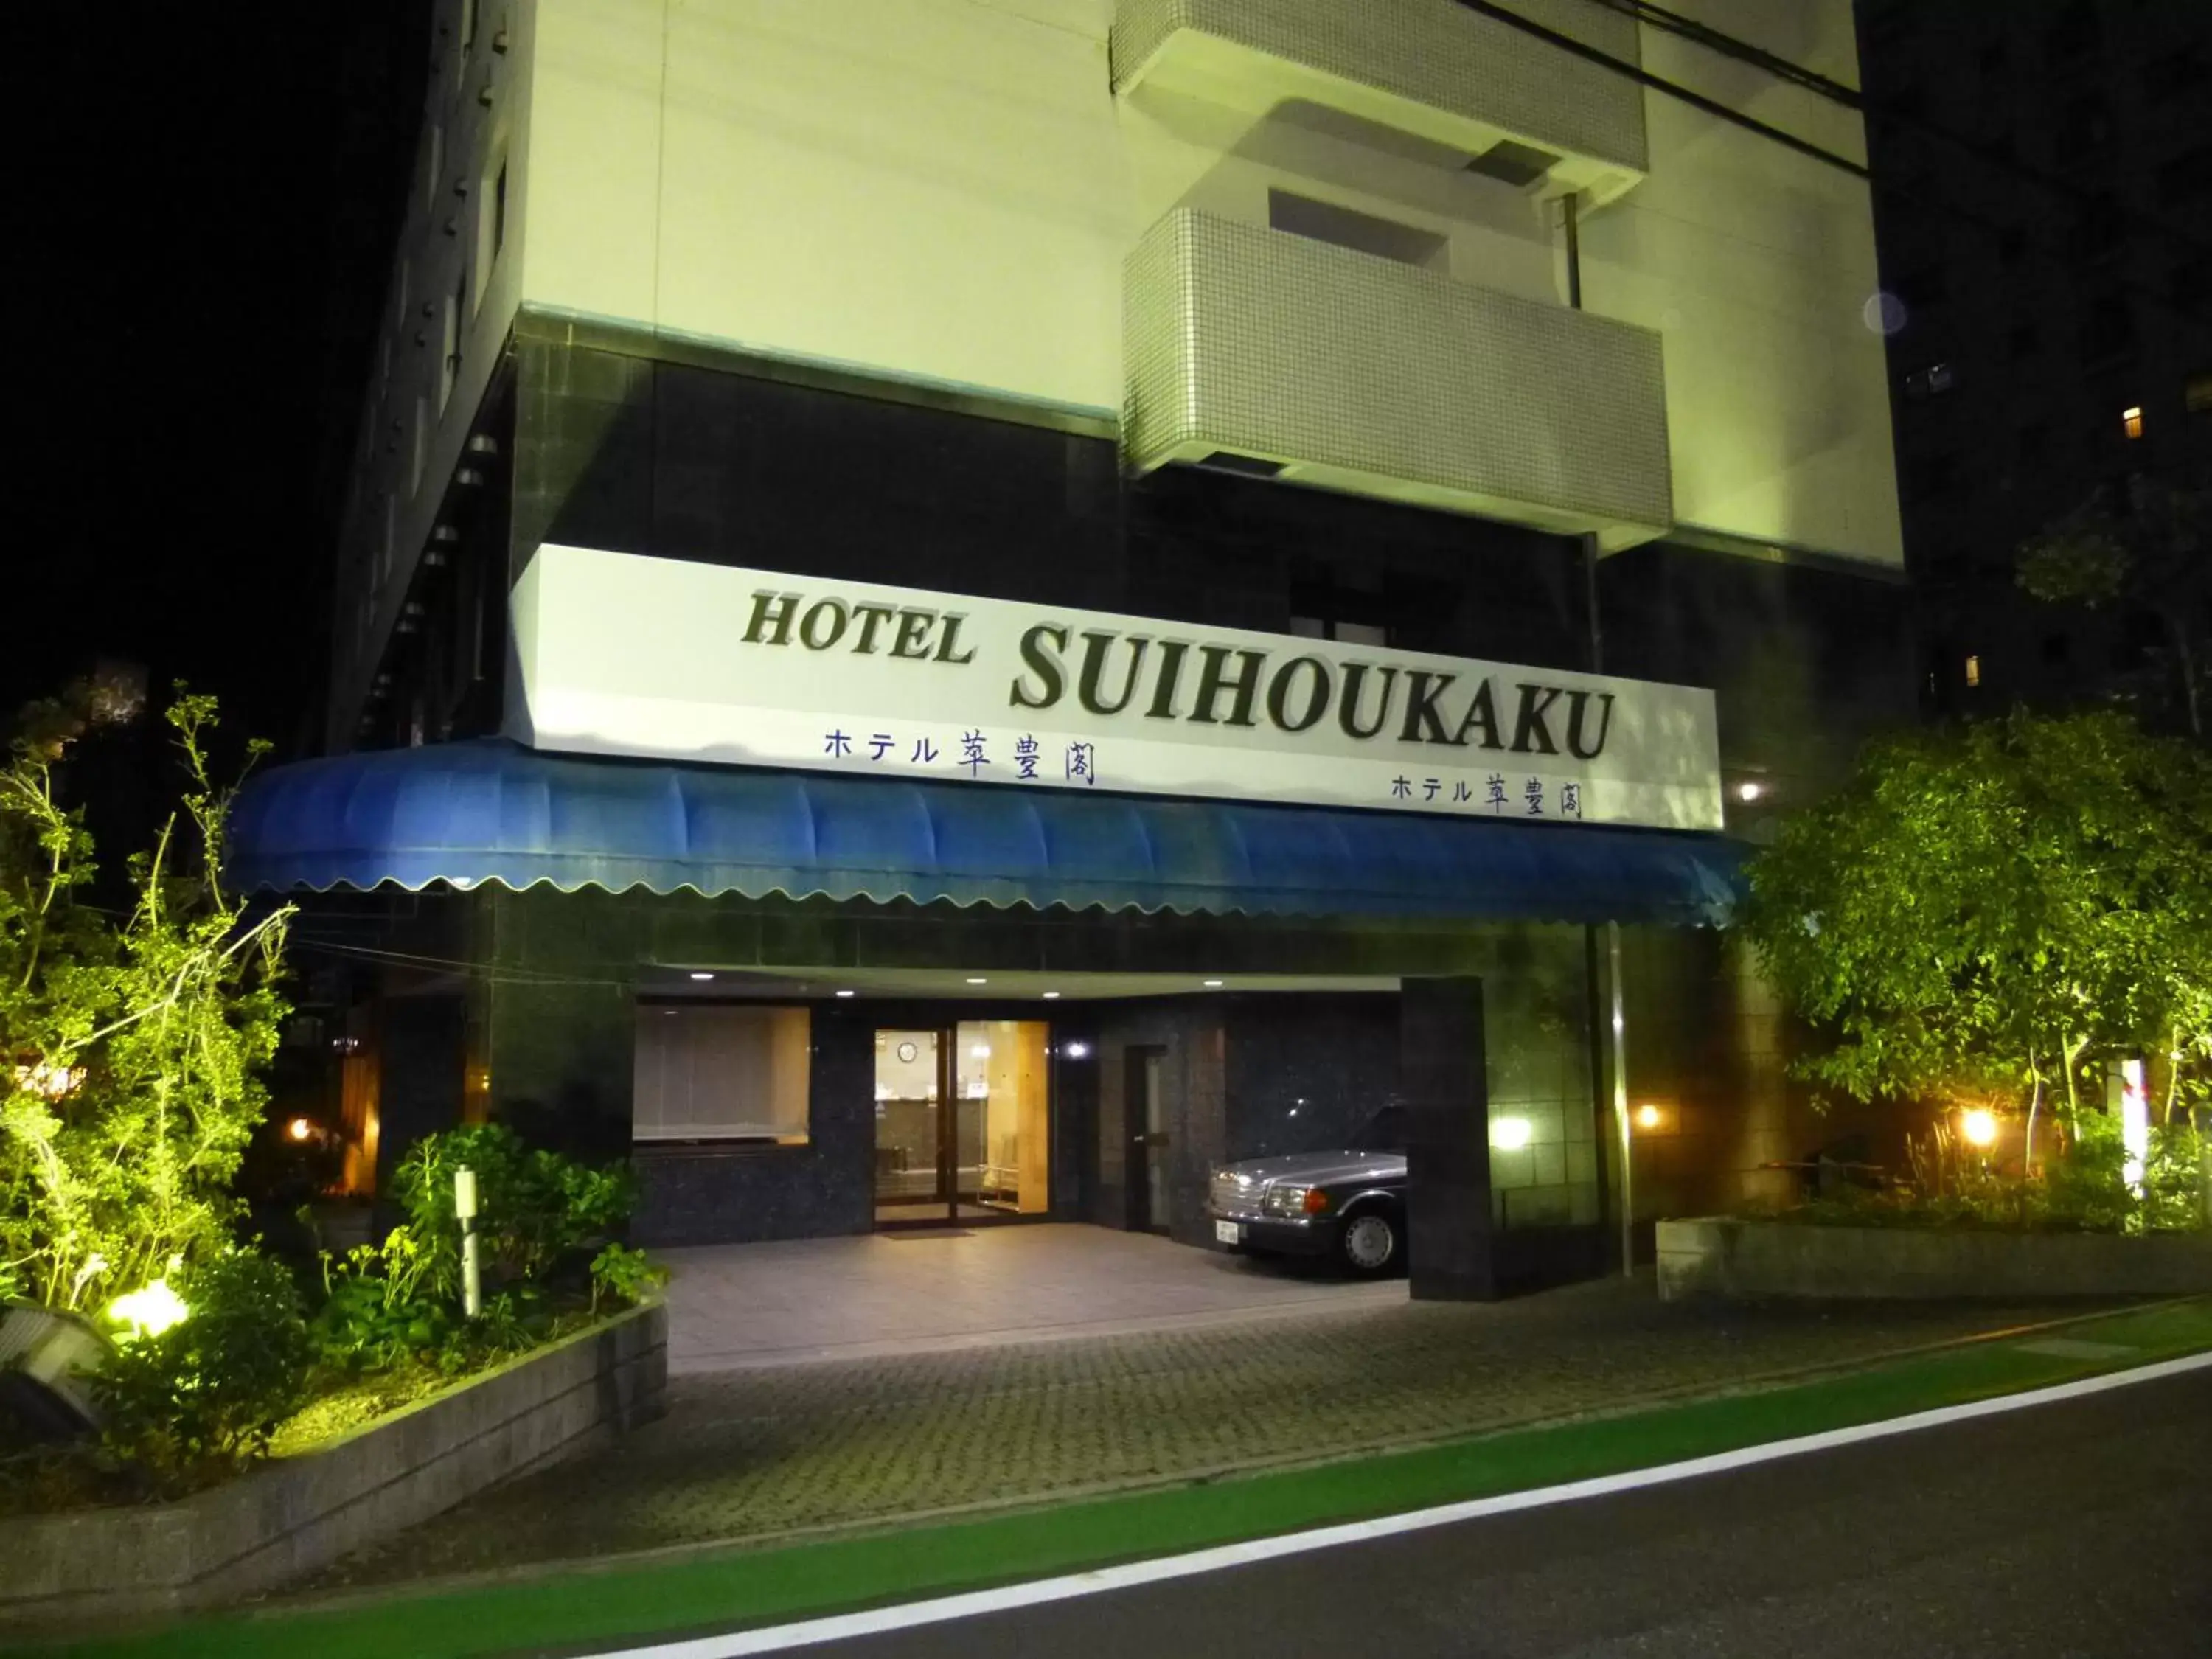 Property building in Suihoukaku Hotel